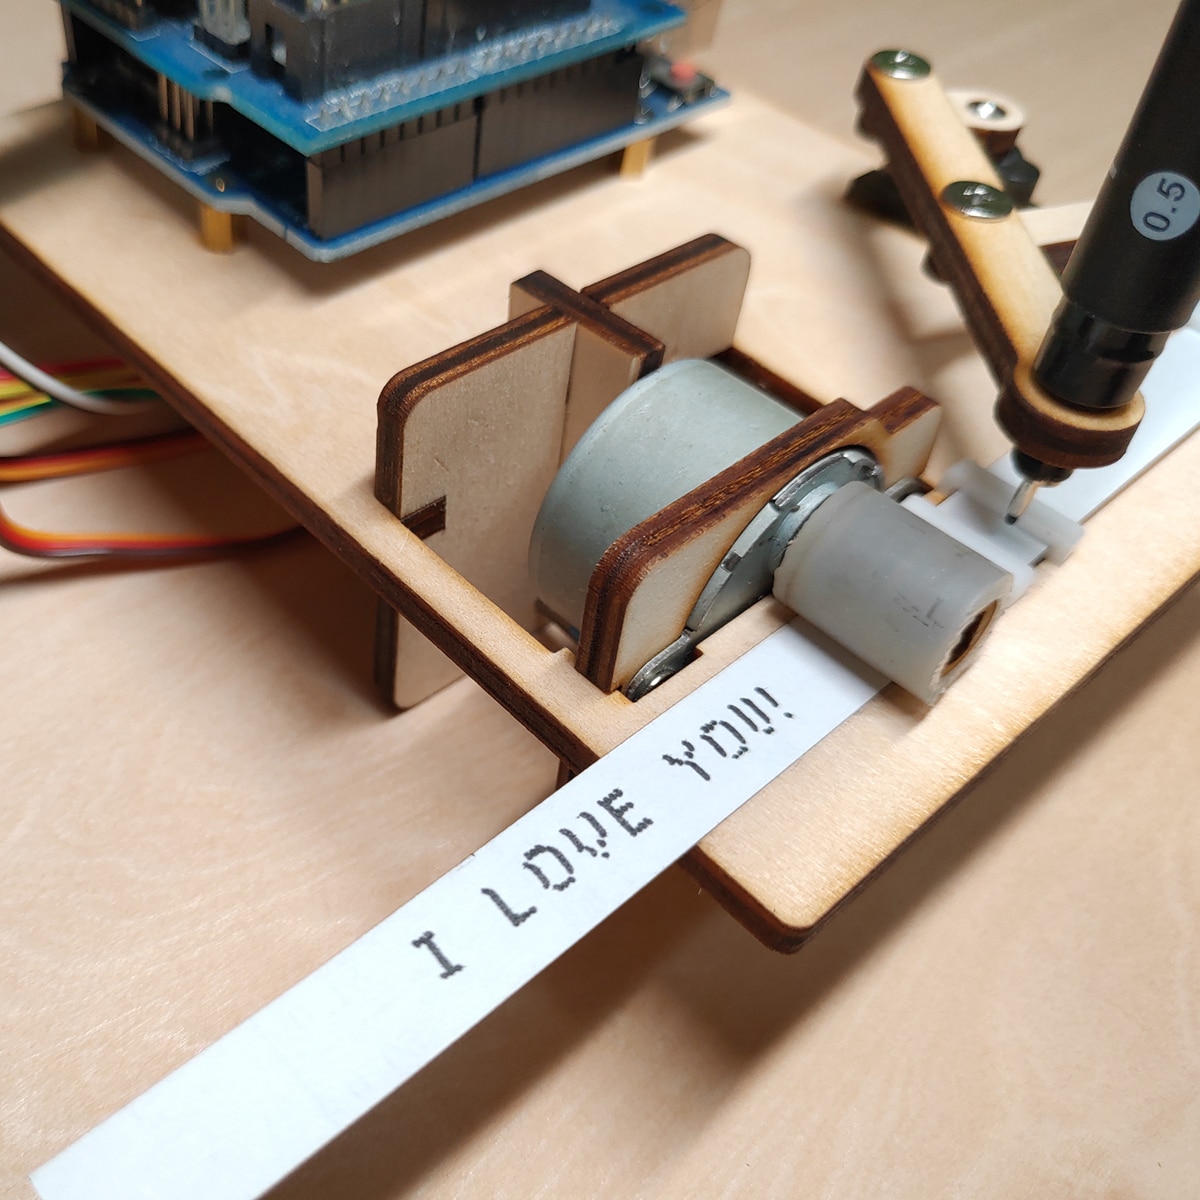 Mini Telegraph Open Source Telegraph Maker DIY Robotic Arm Writing Robot